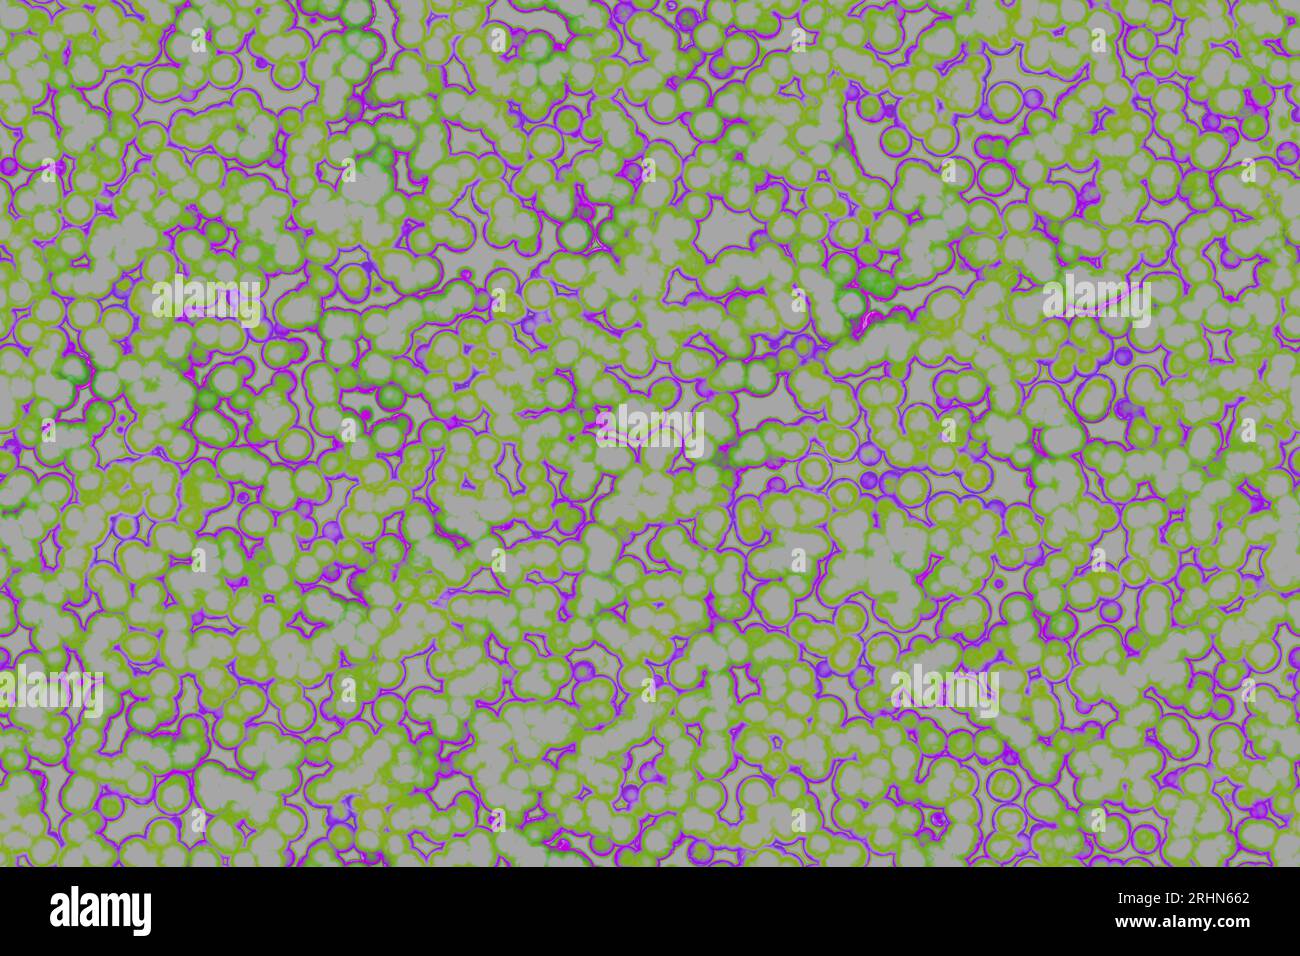 Shape of bacterial cell: cocci, bacilli, spirilla bacteria Stock Photo